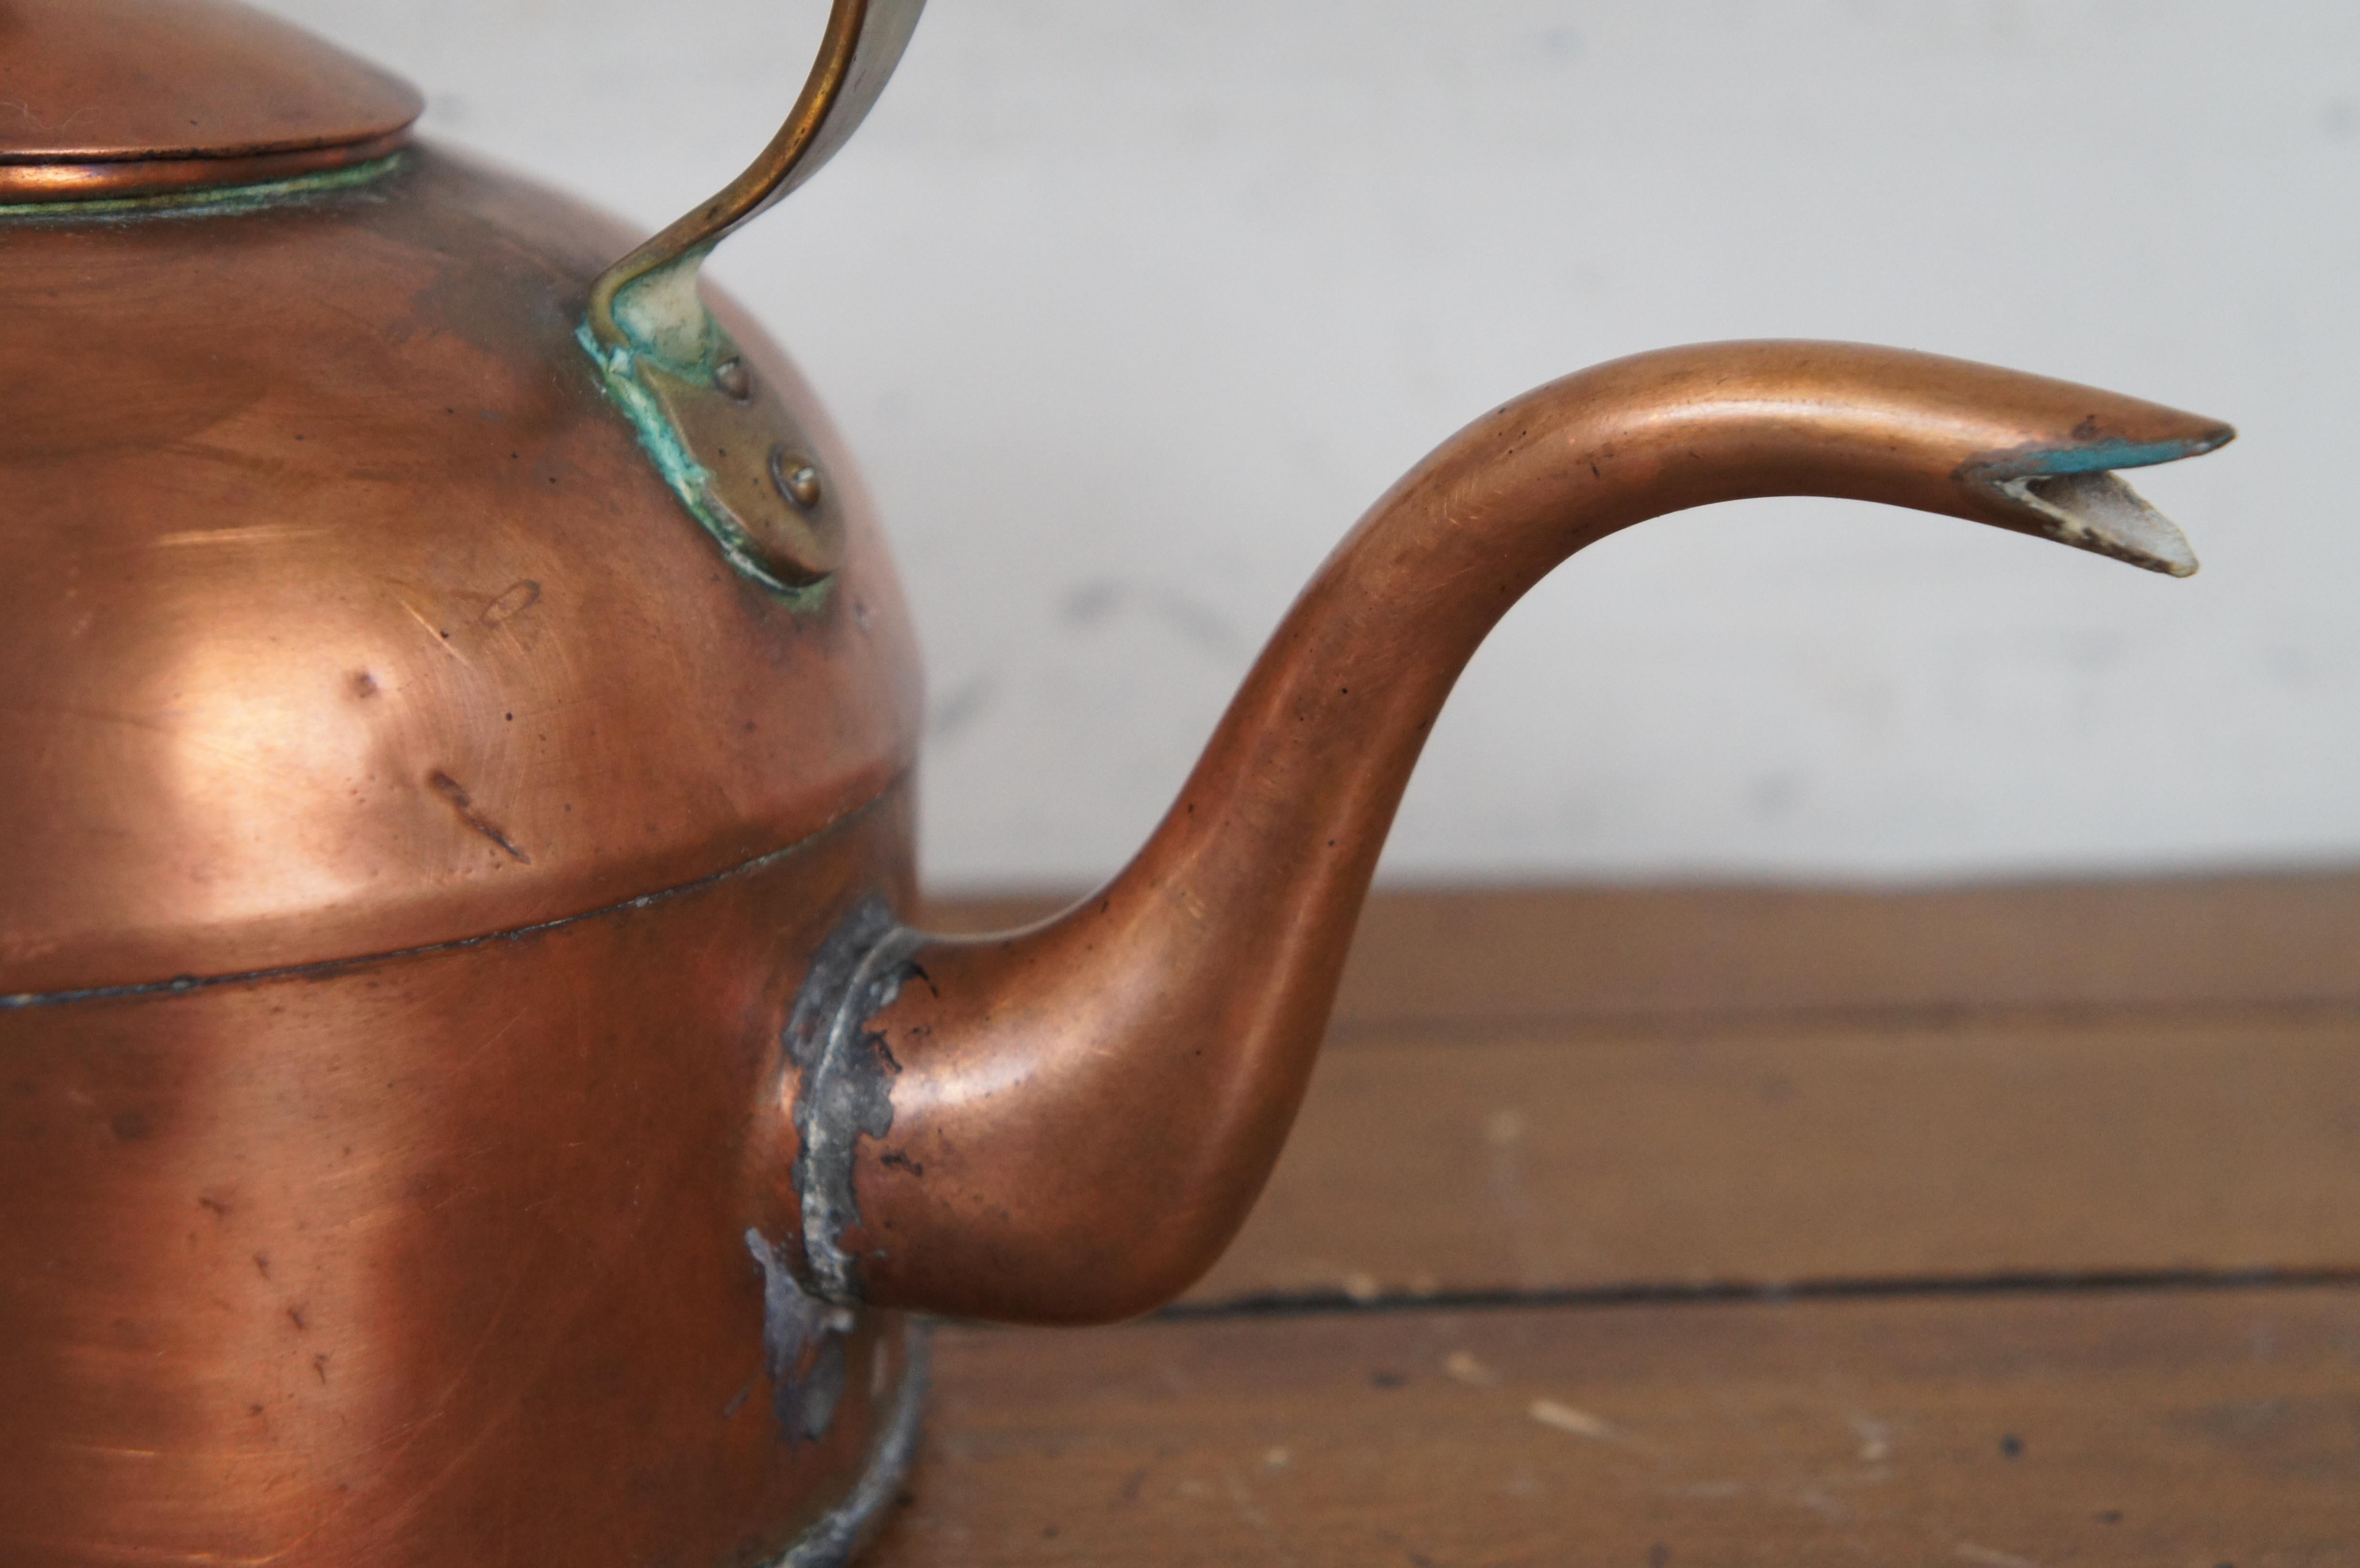 Antique English George III Copper Gooseneck Bird Spout Coffee Tea Kettle 12